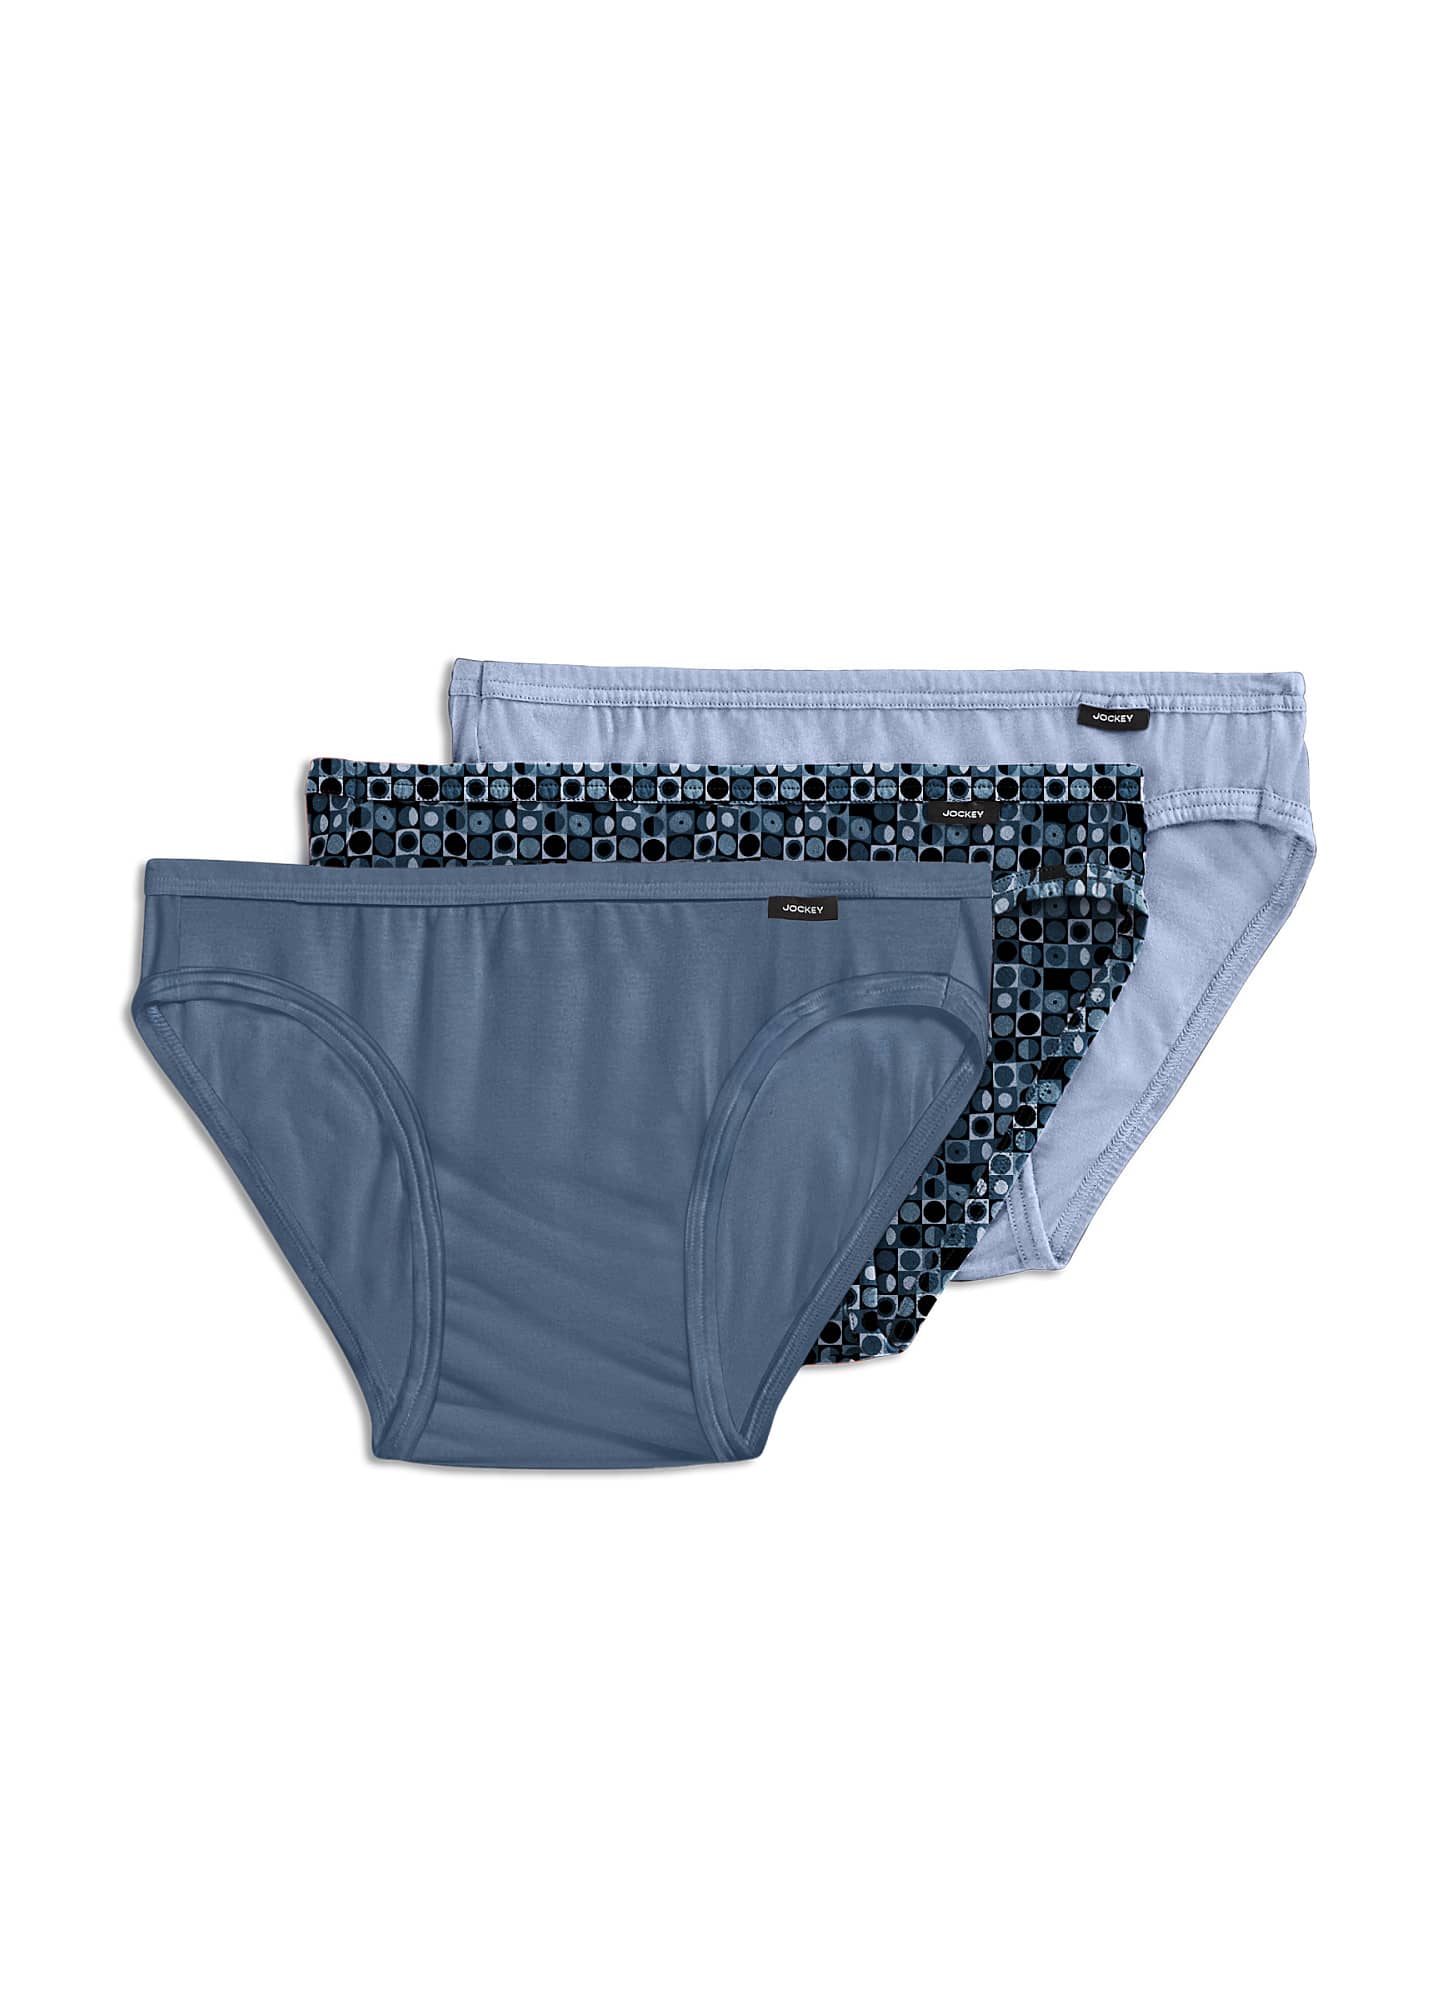 Jockey Men's Underwear Elance Bikini - 6 Pack, Black, S 